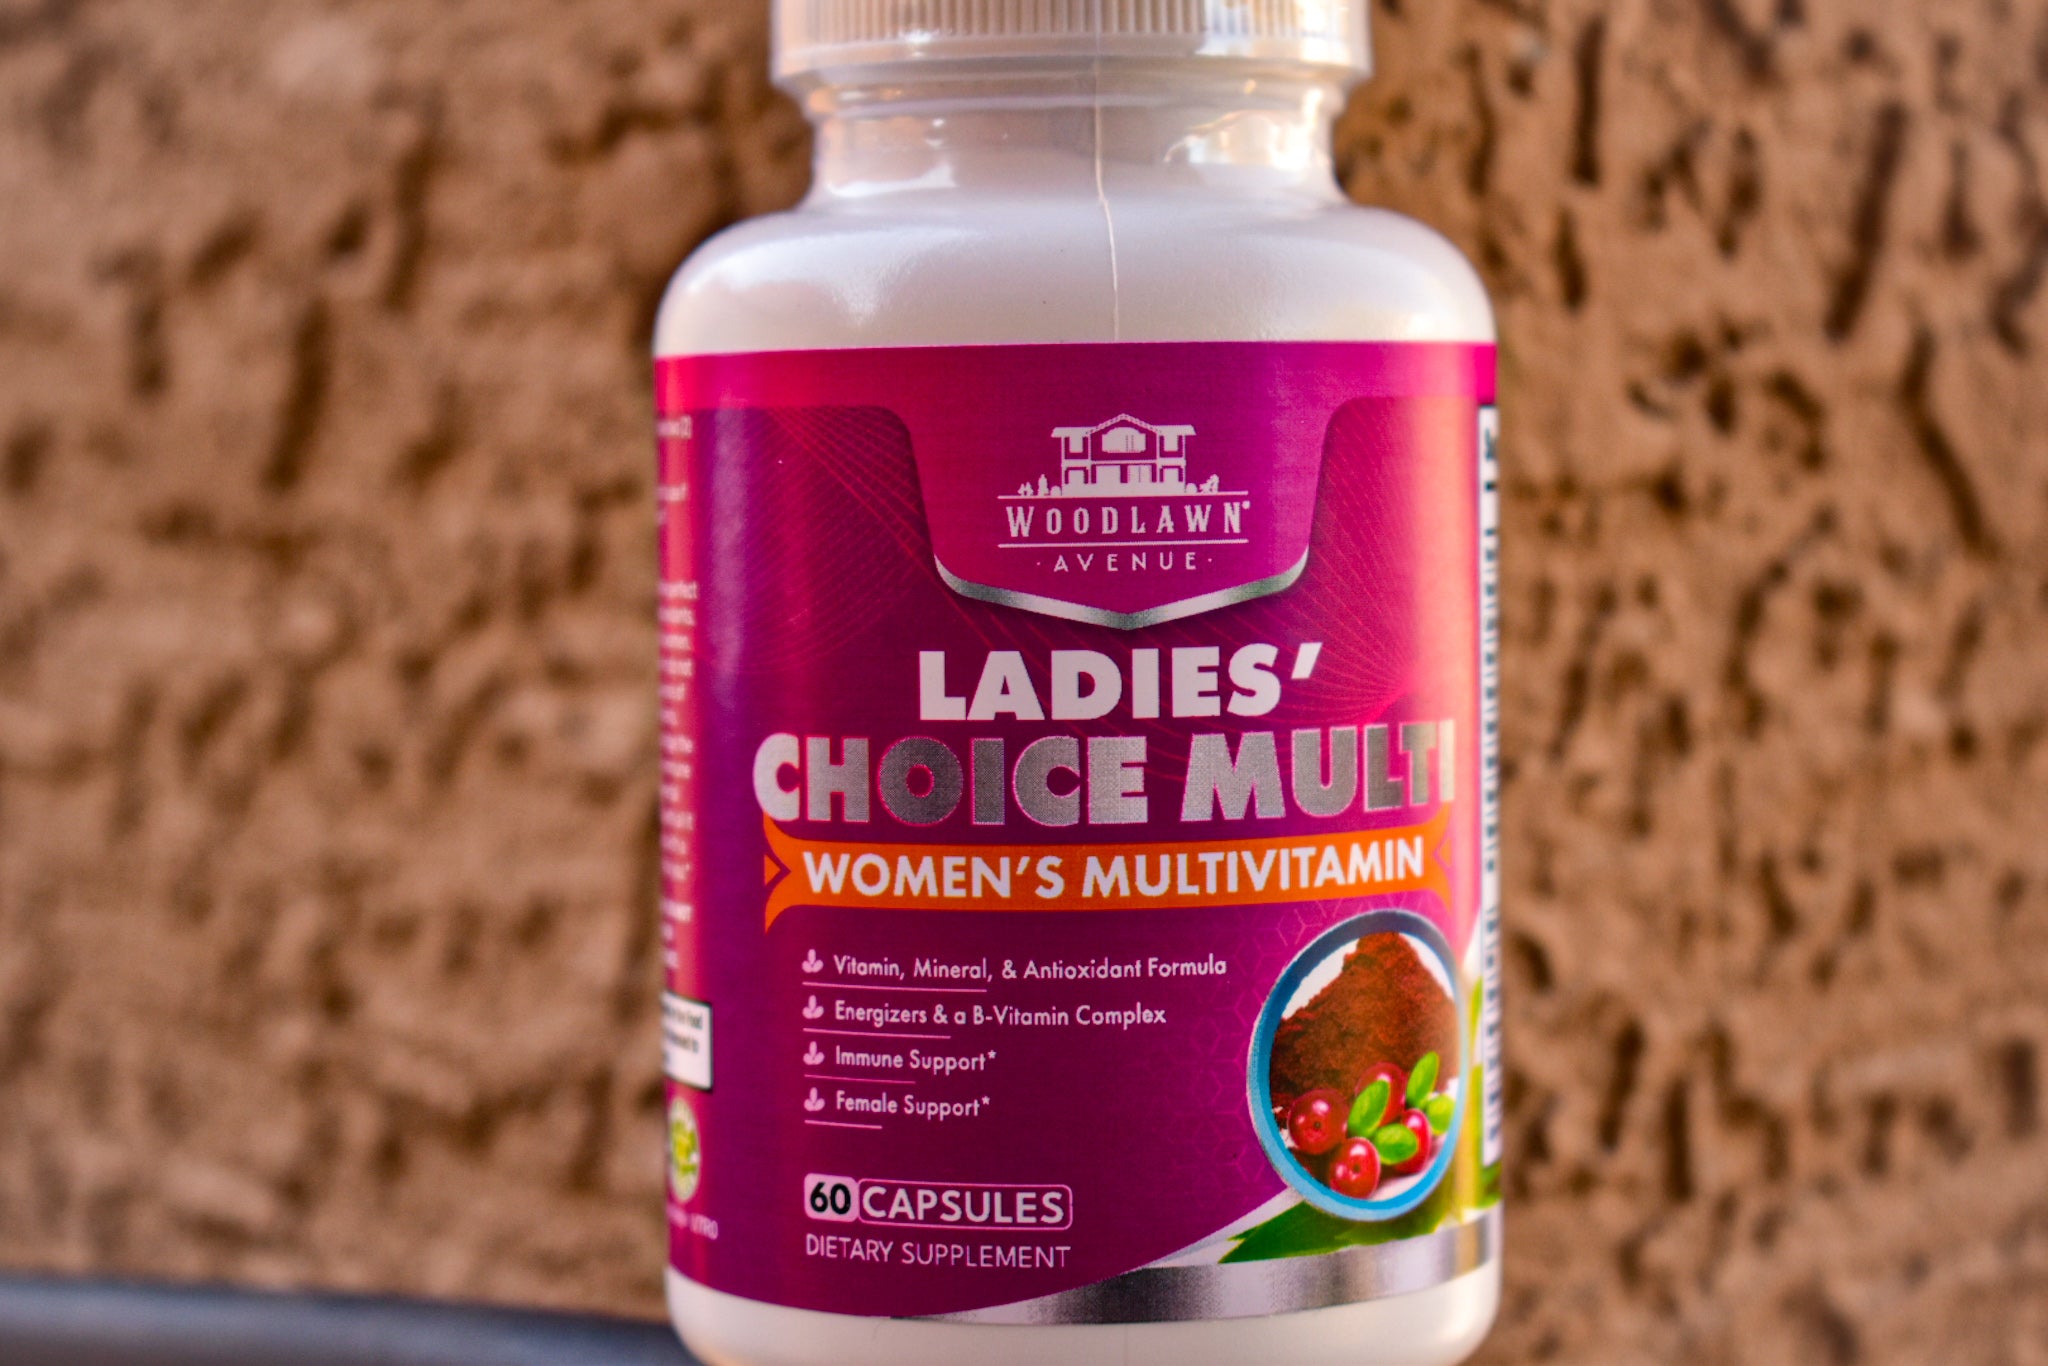 Ladies’ Choice Multi - Woman's Multivitamin